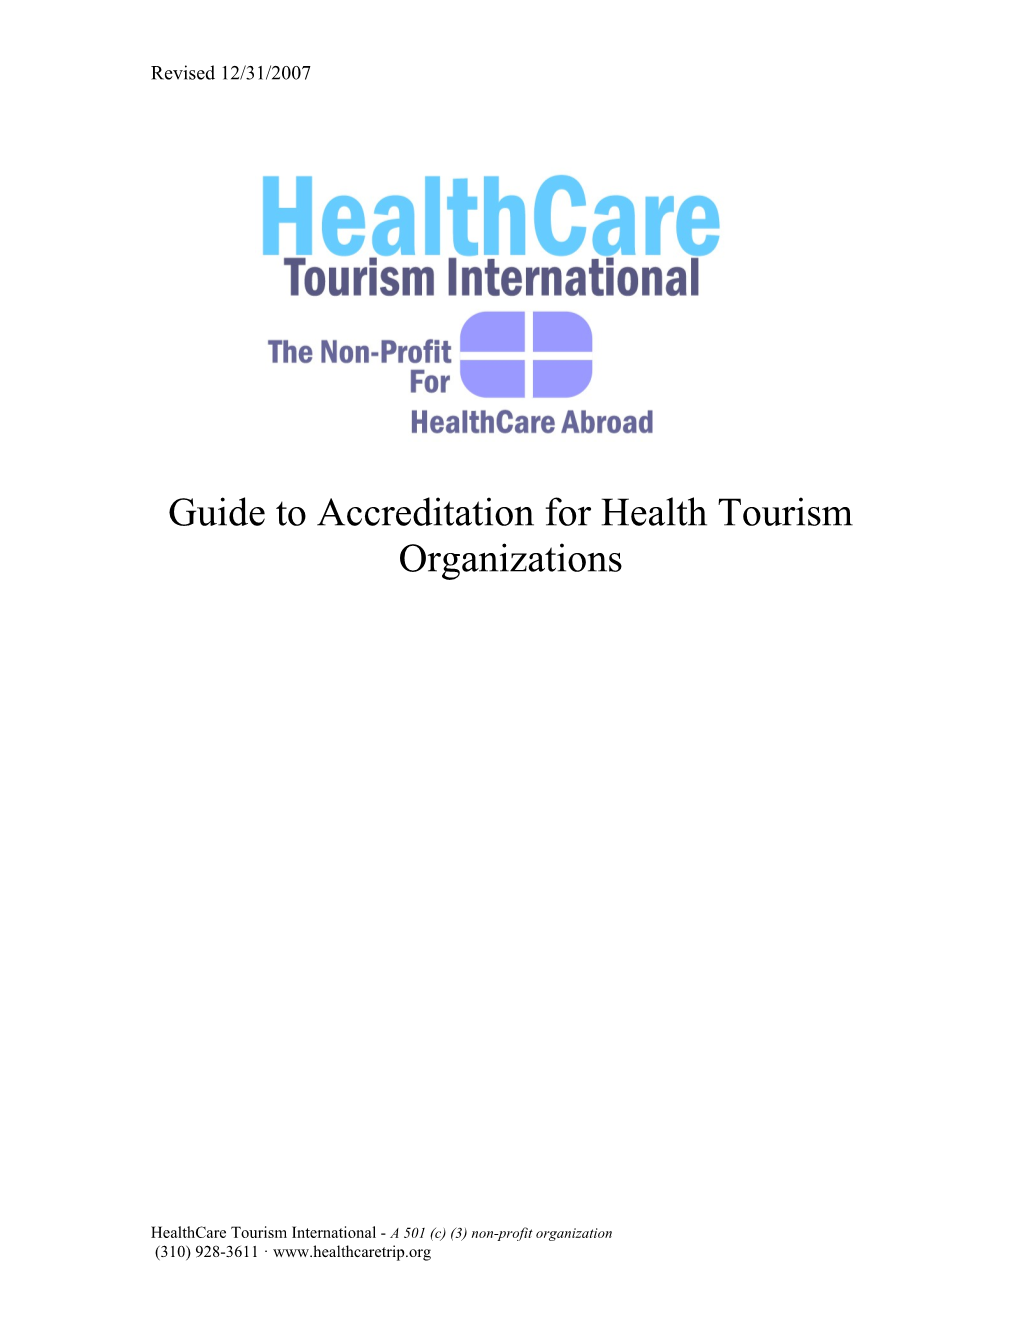 Healthcare Tourism International